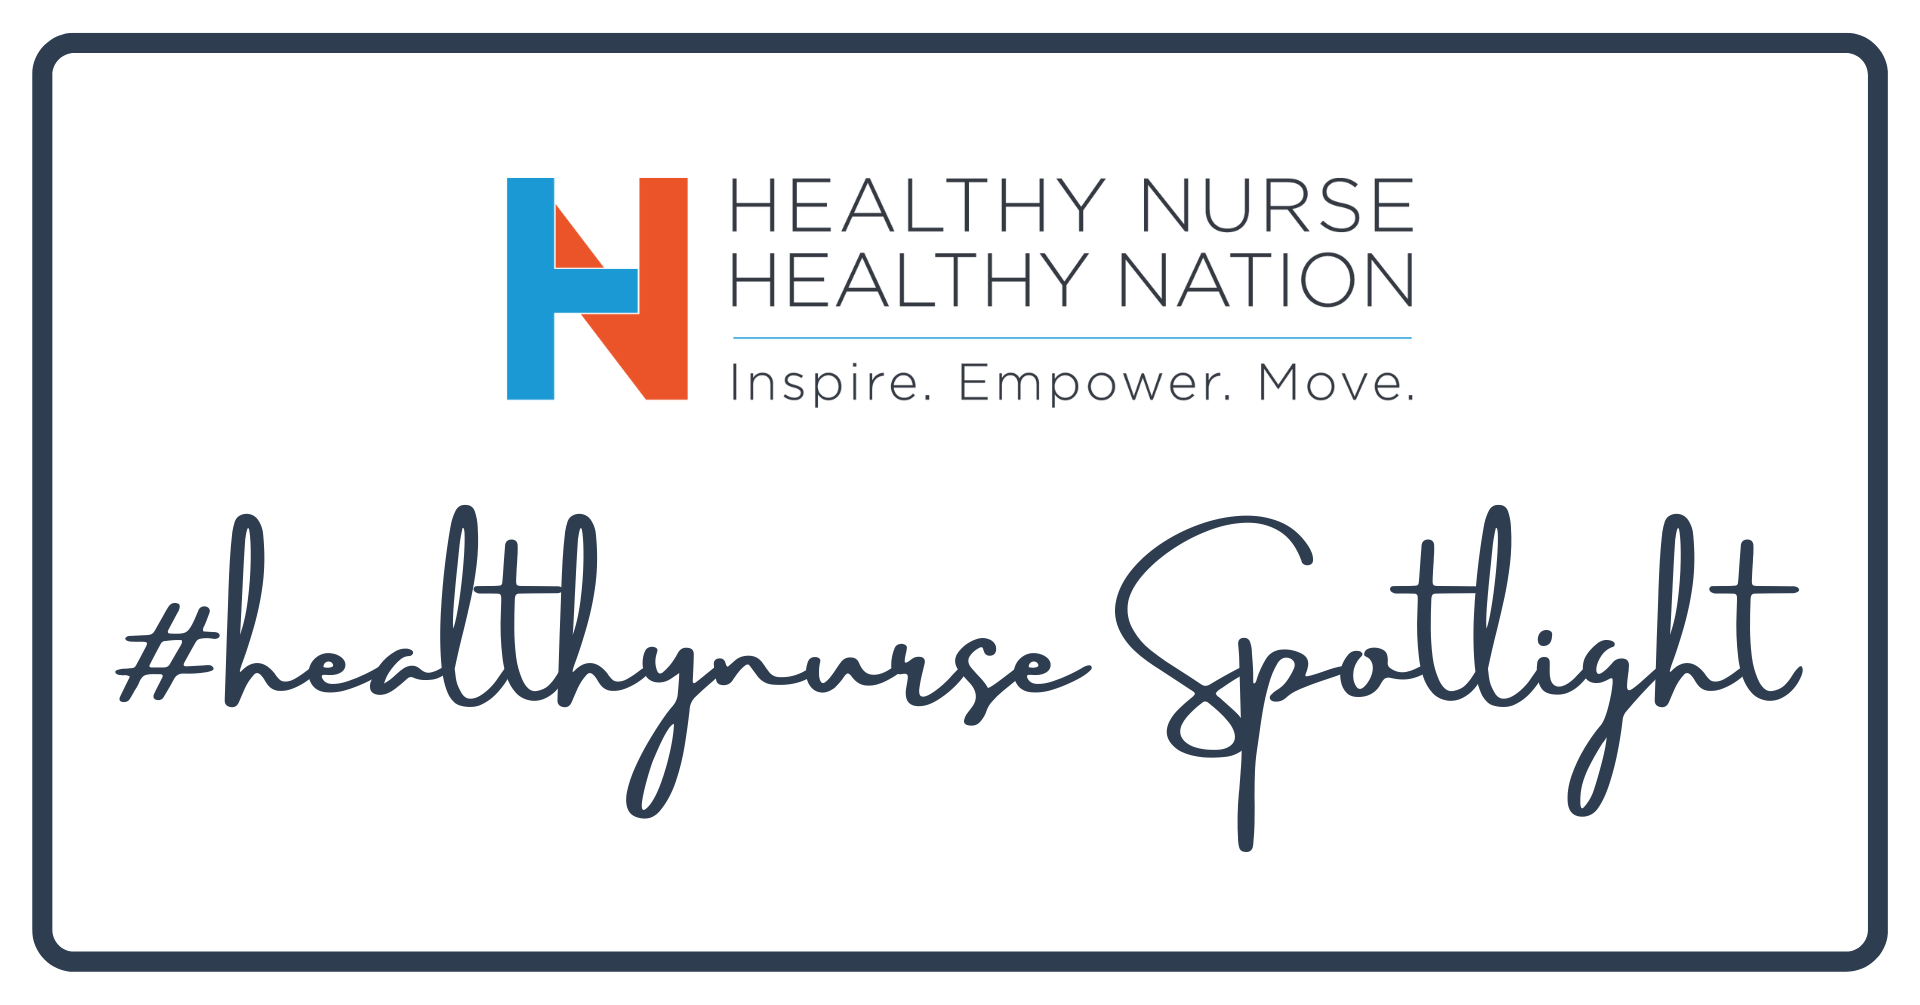 Healthy Nurse, Healthy Nation™ - #healthynurse Spotlight Series - Captain LJ Belsito, RN, MSN, CCM 3270